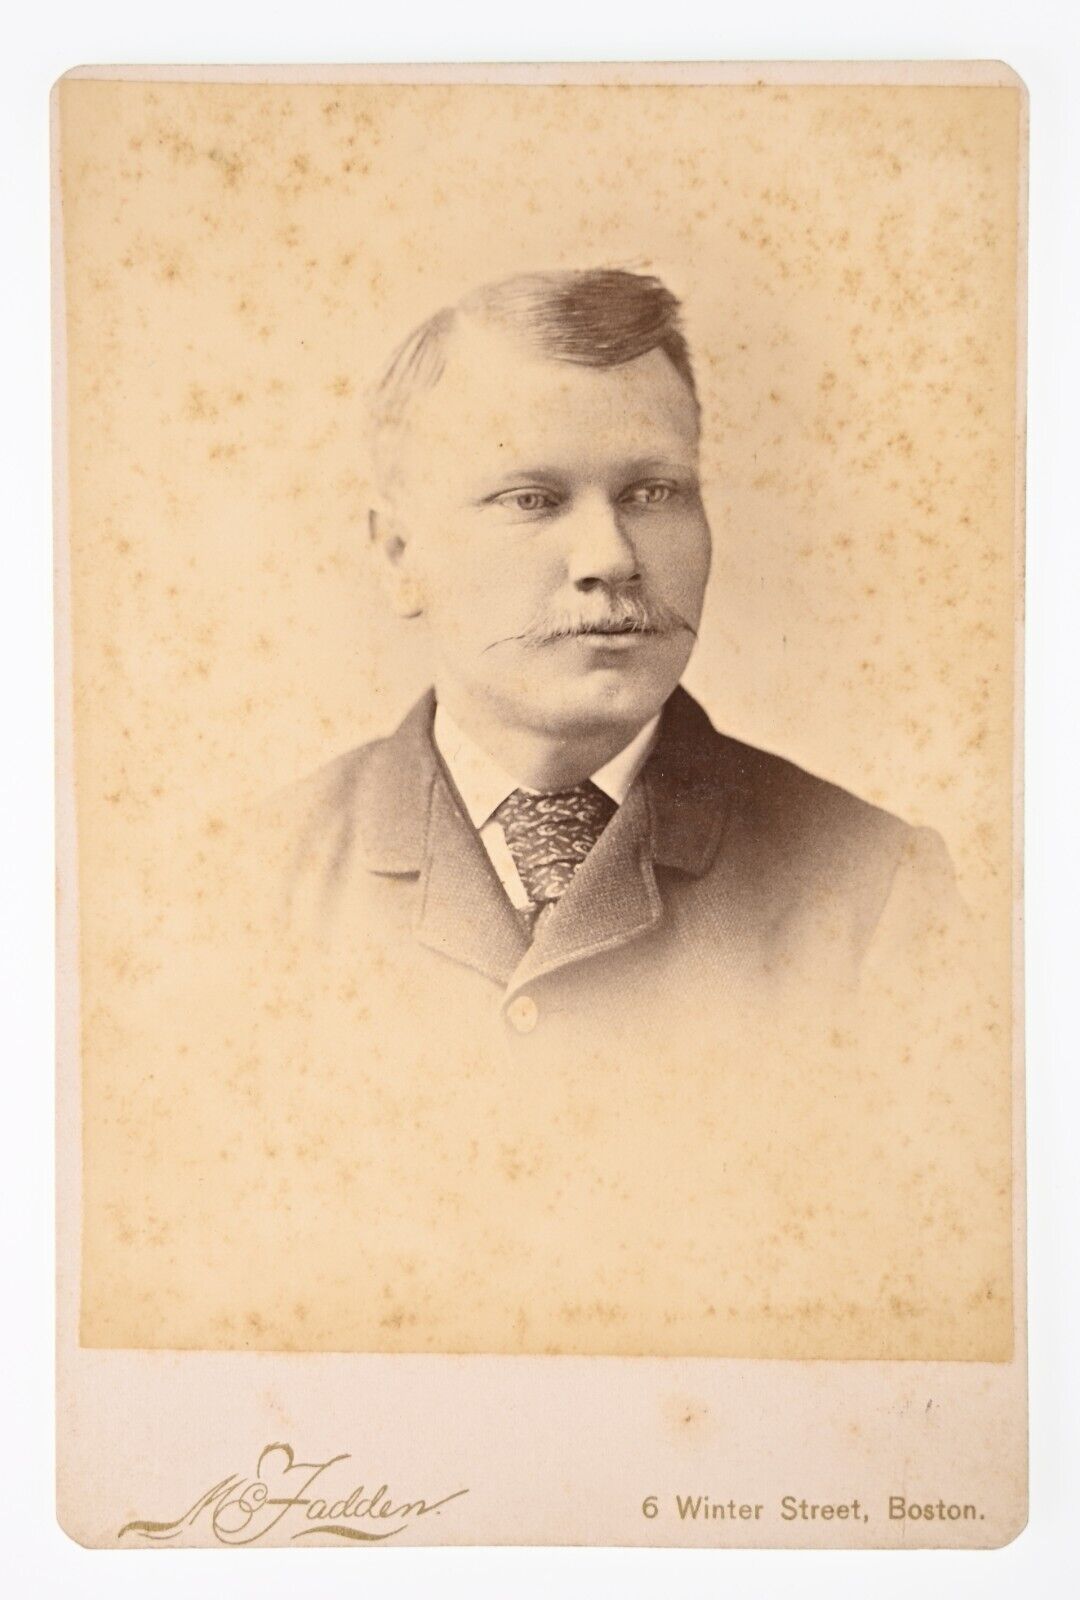 CIRCA 1880s CABINET CARD Mc. FADDEN HANDSOME MAN WITH MUSTACHE BOSTON MASS.